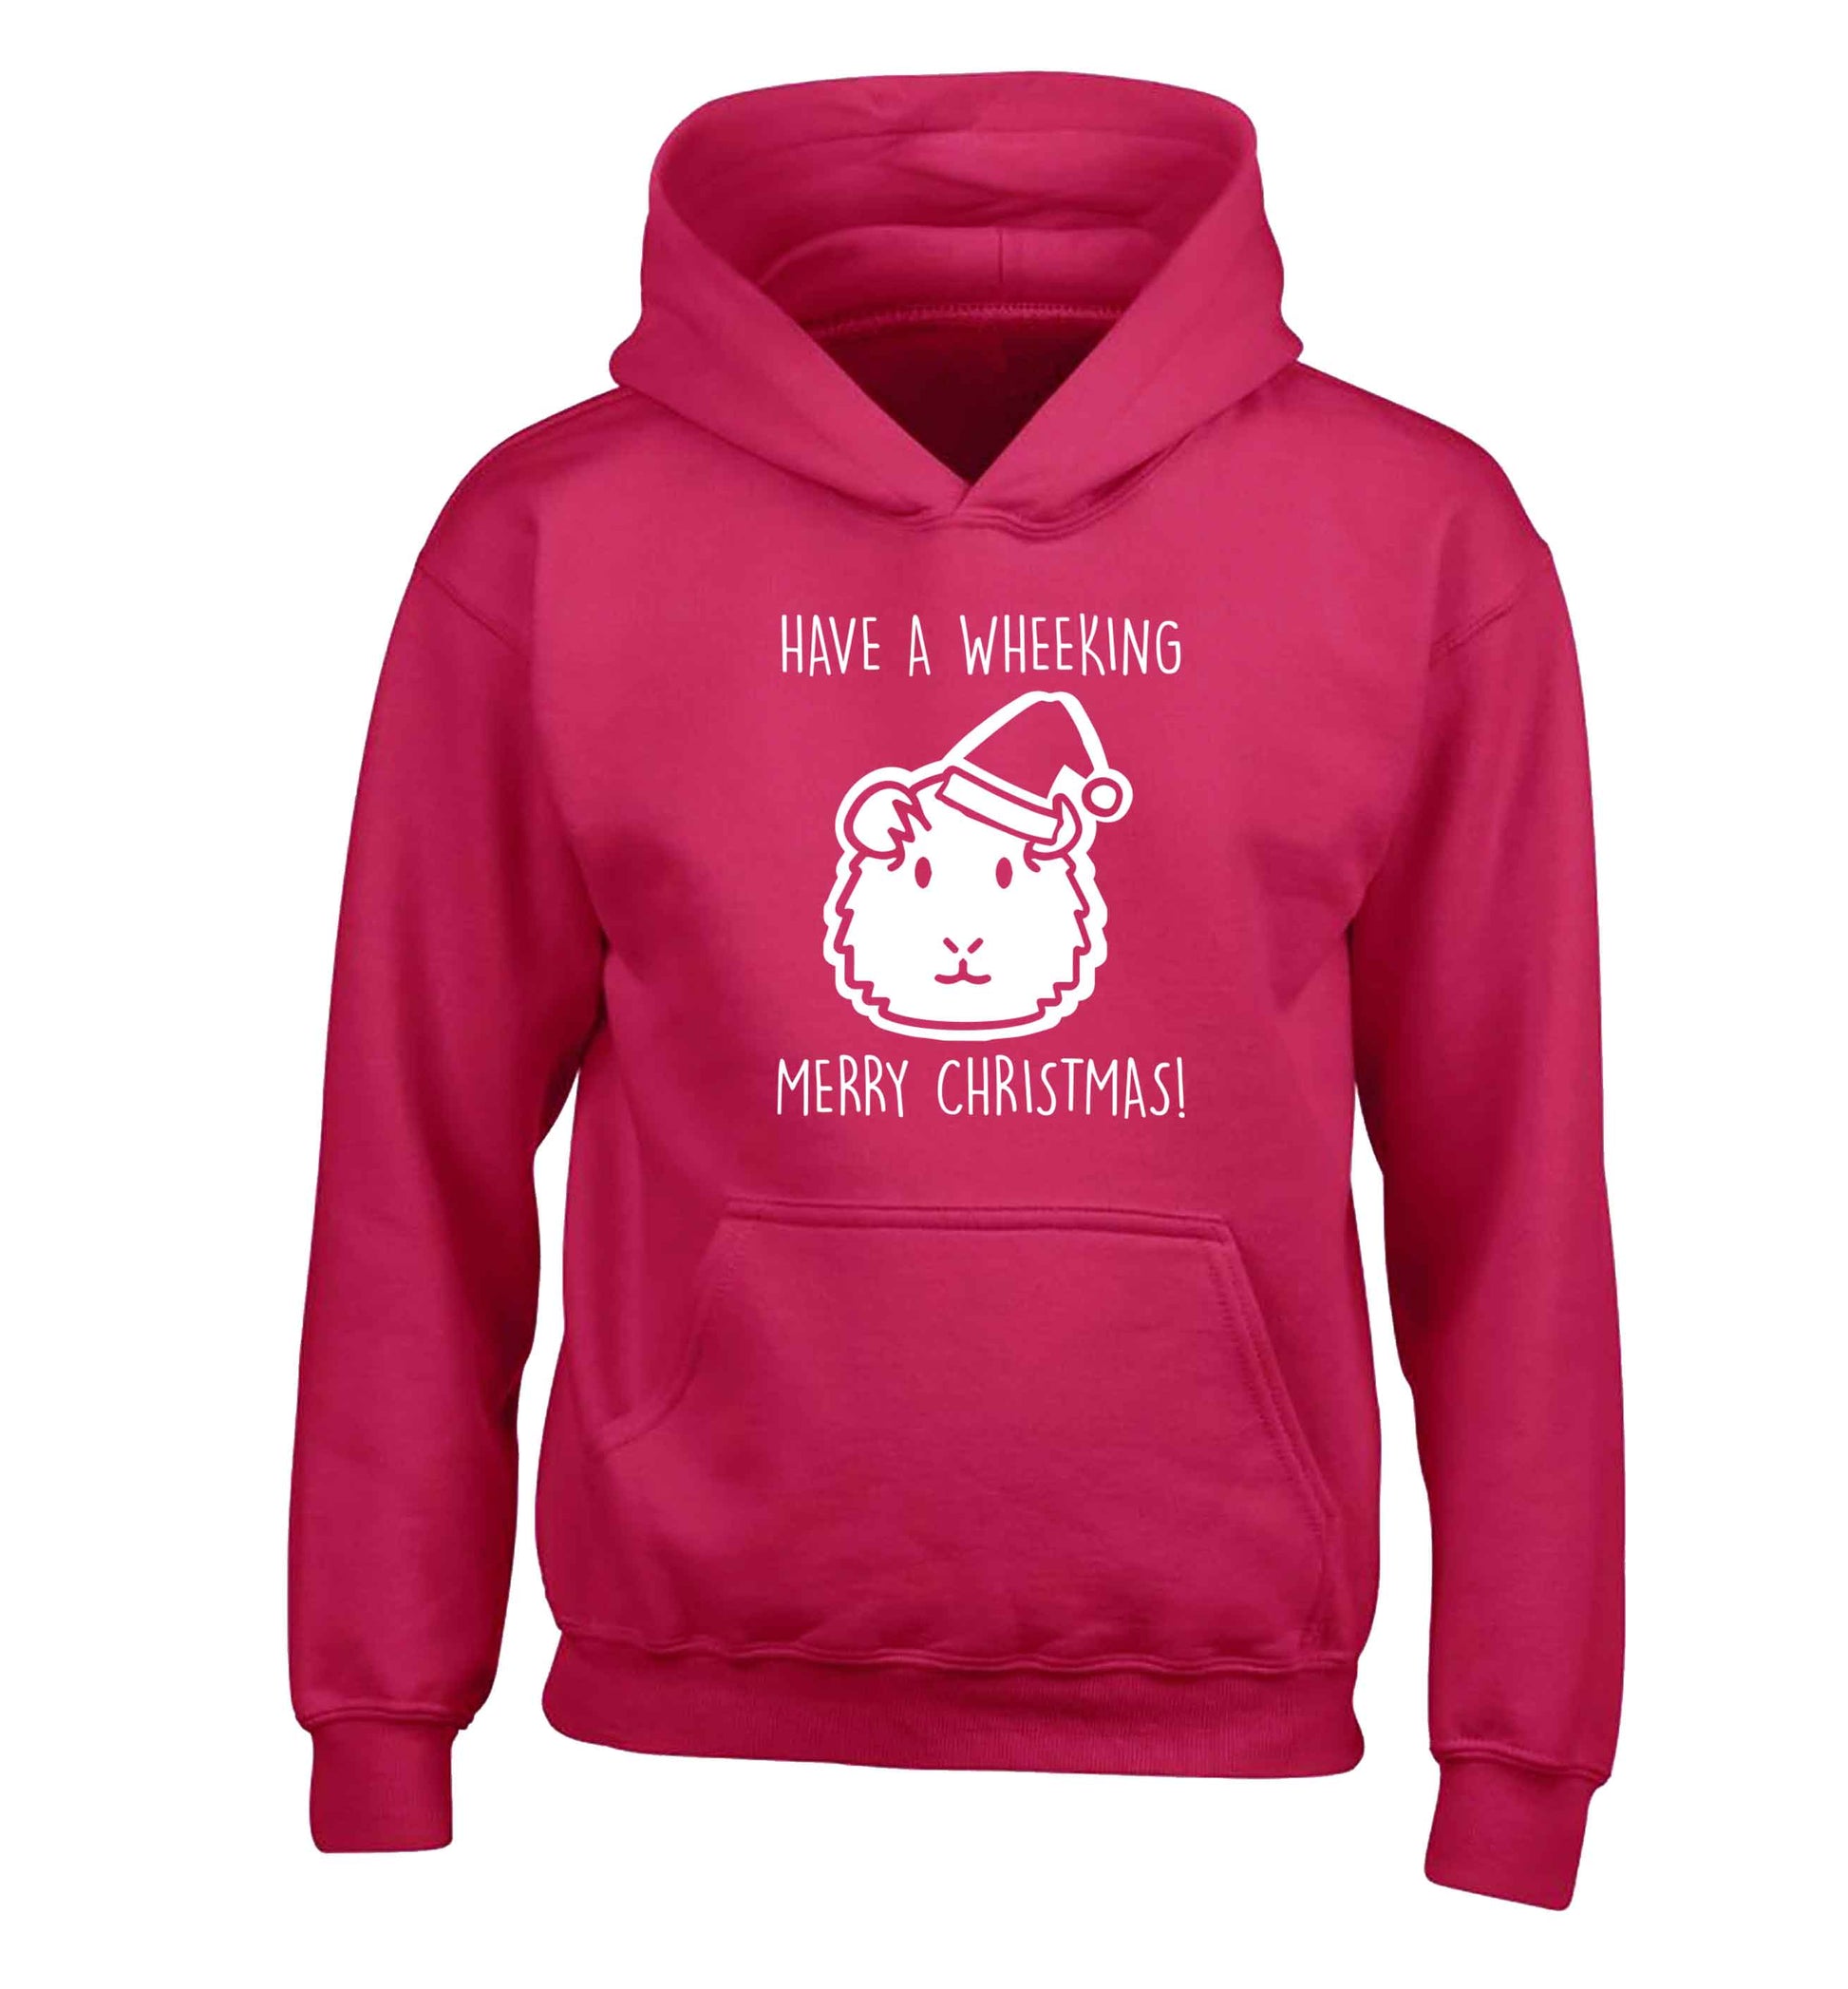 Have a wheeking merry Christmas children's pink hoodie 12-13 Years